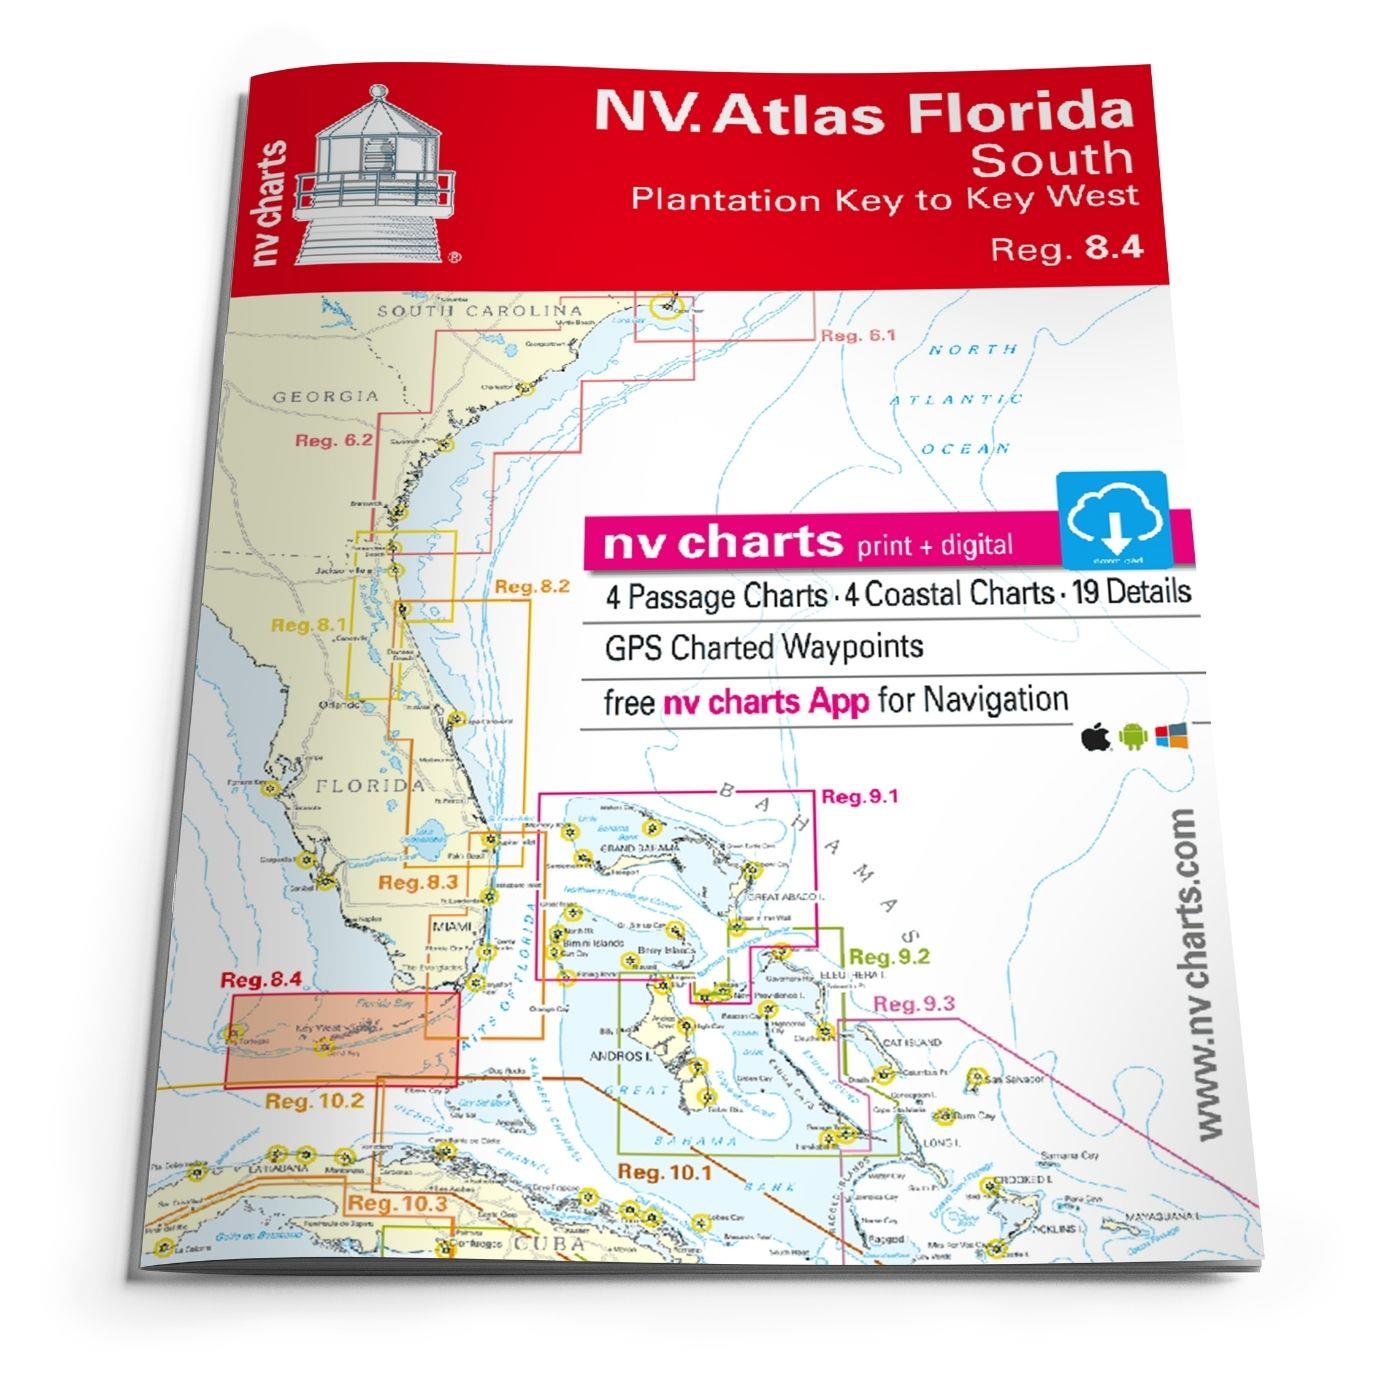 NV Charts Florida 8.4 - South Florida, Plantation Key to Key West